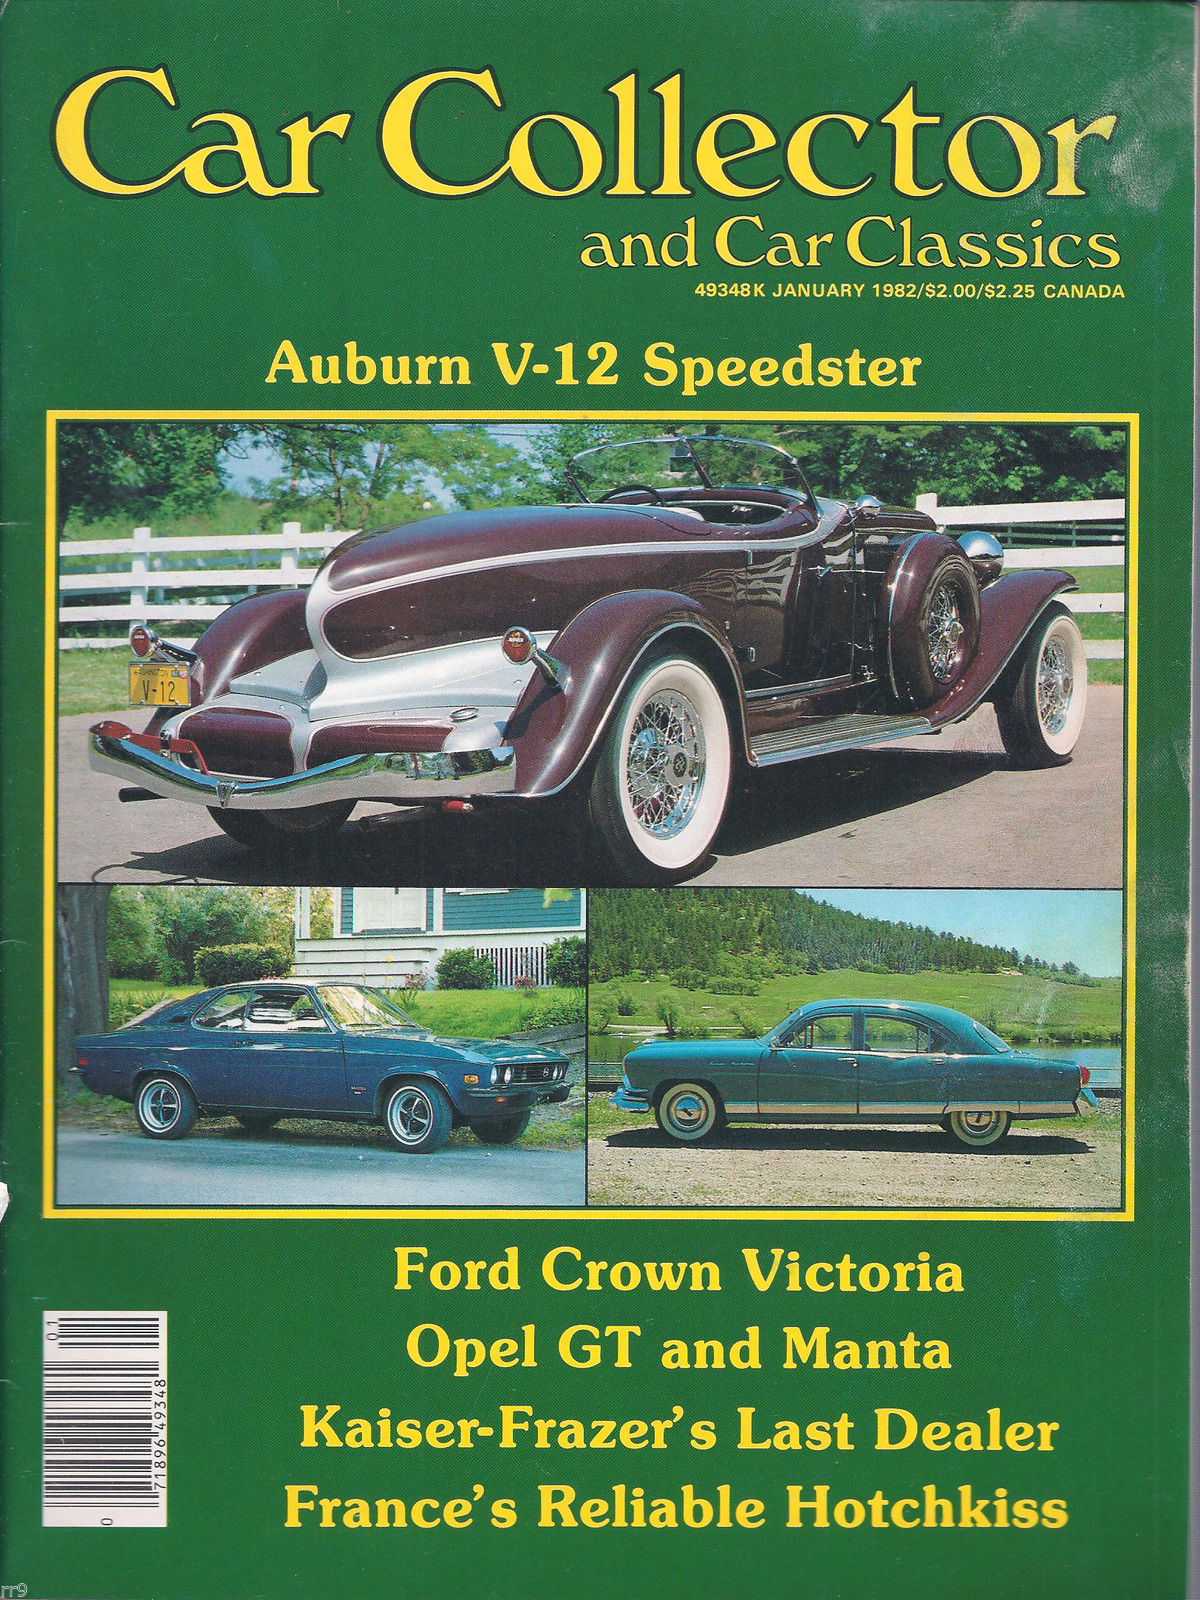 Car Collector and Car Classics Magazine January 1982 - $2.50